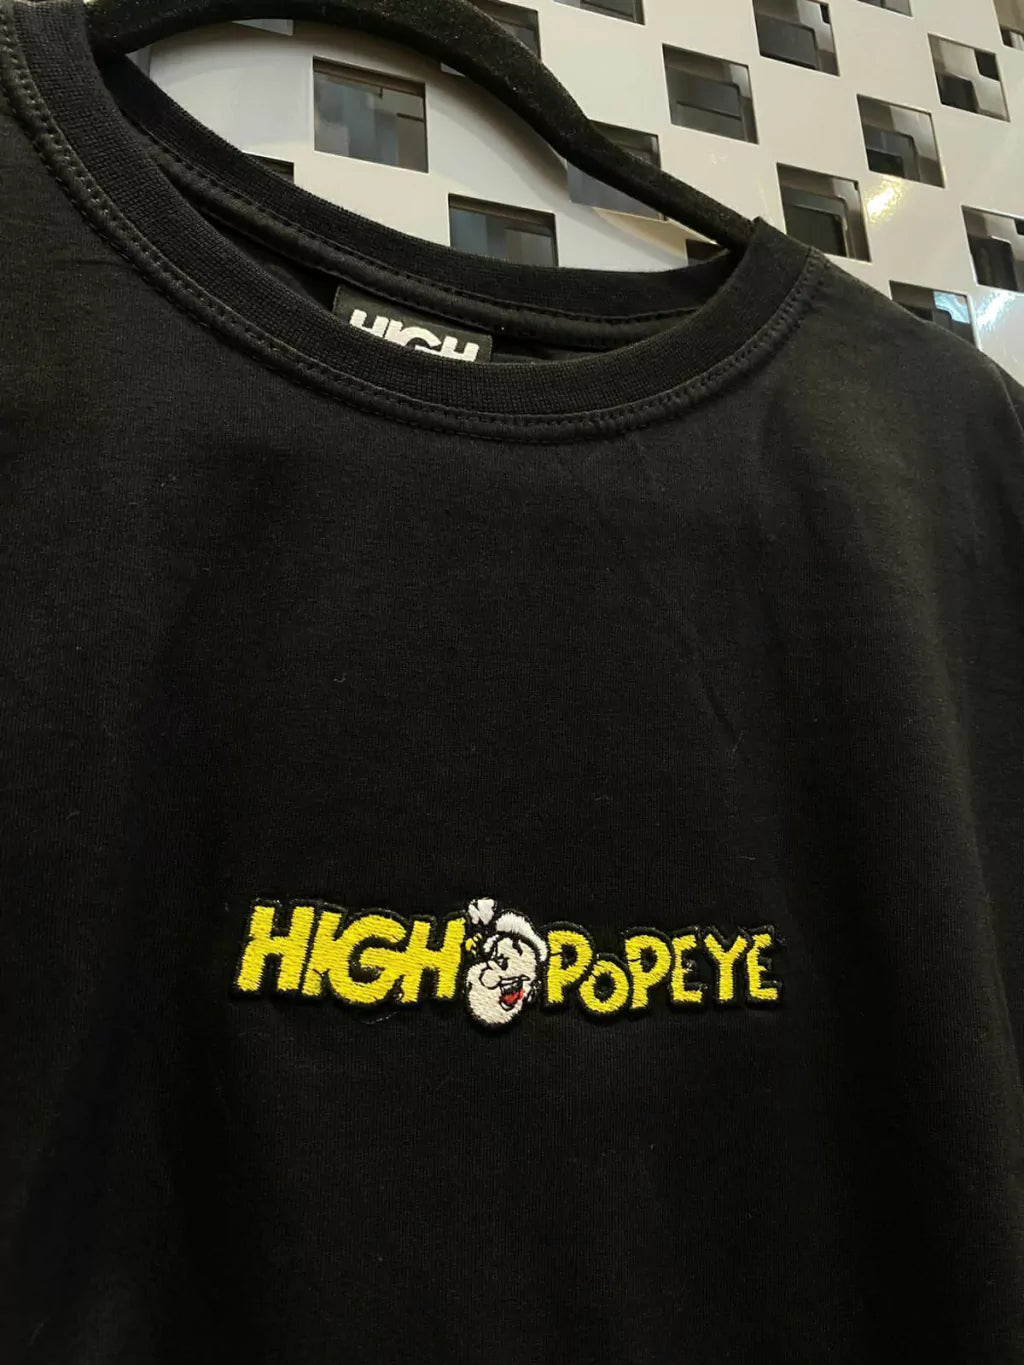 Camiseta high Popeye bordada